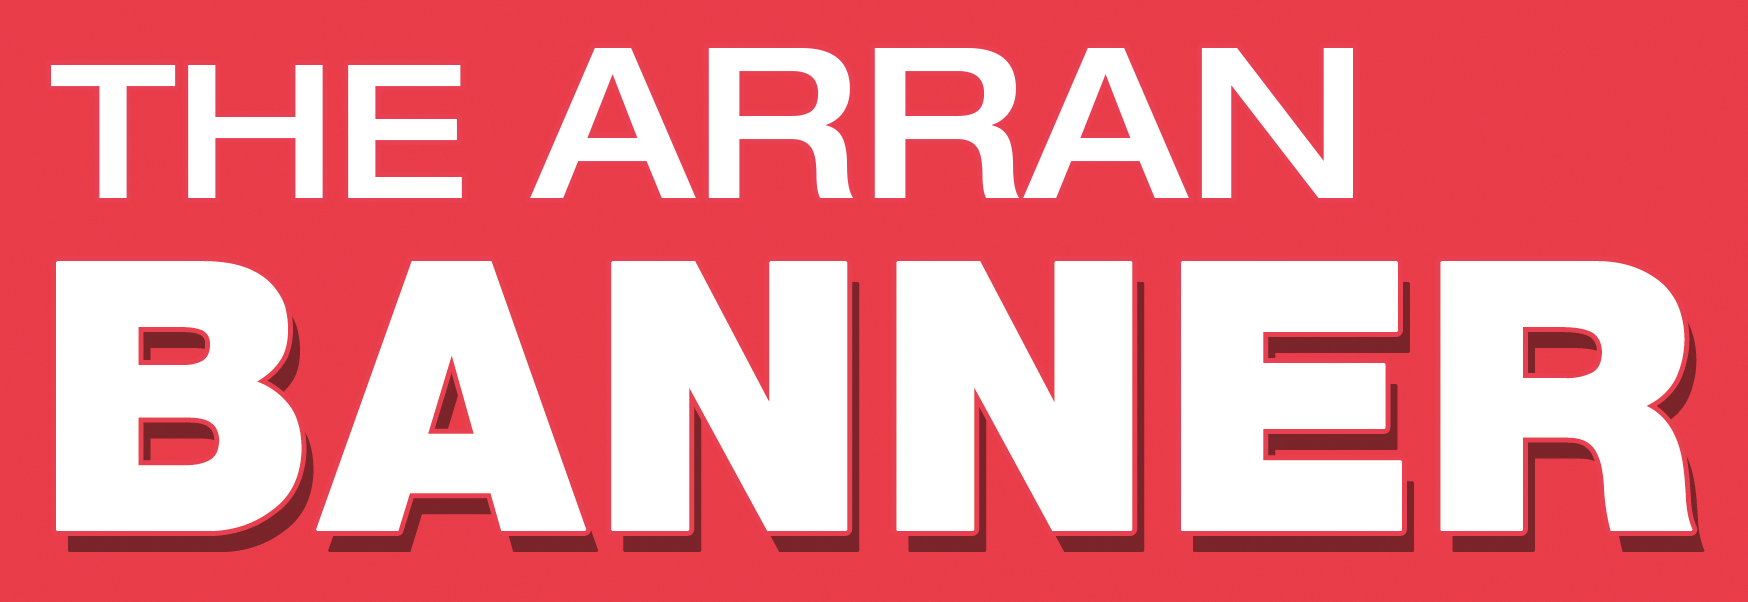 Arran Banner